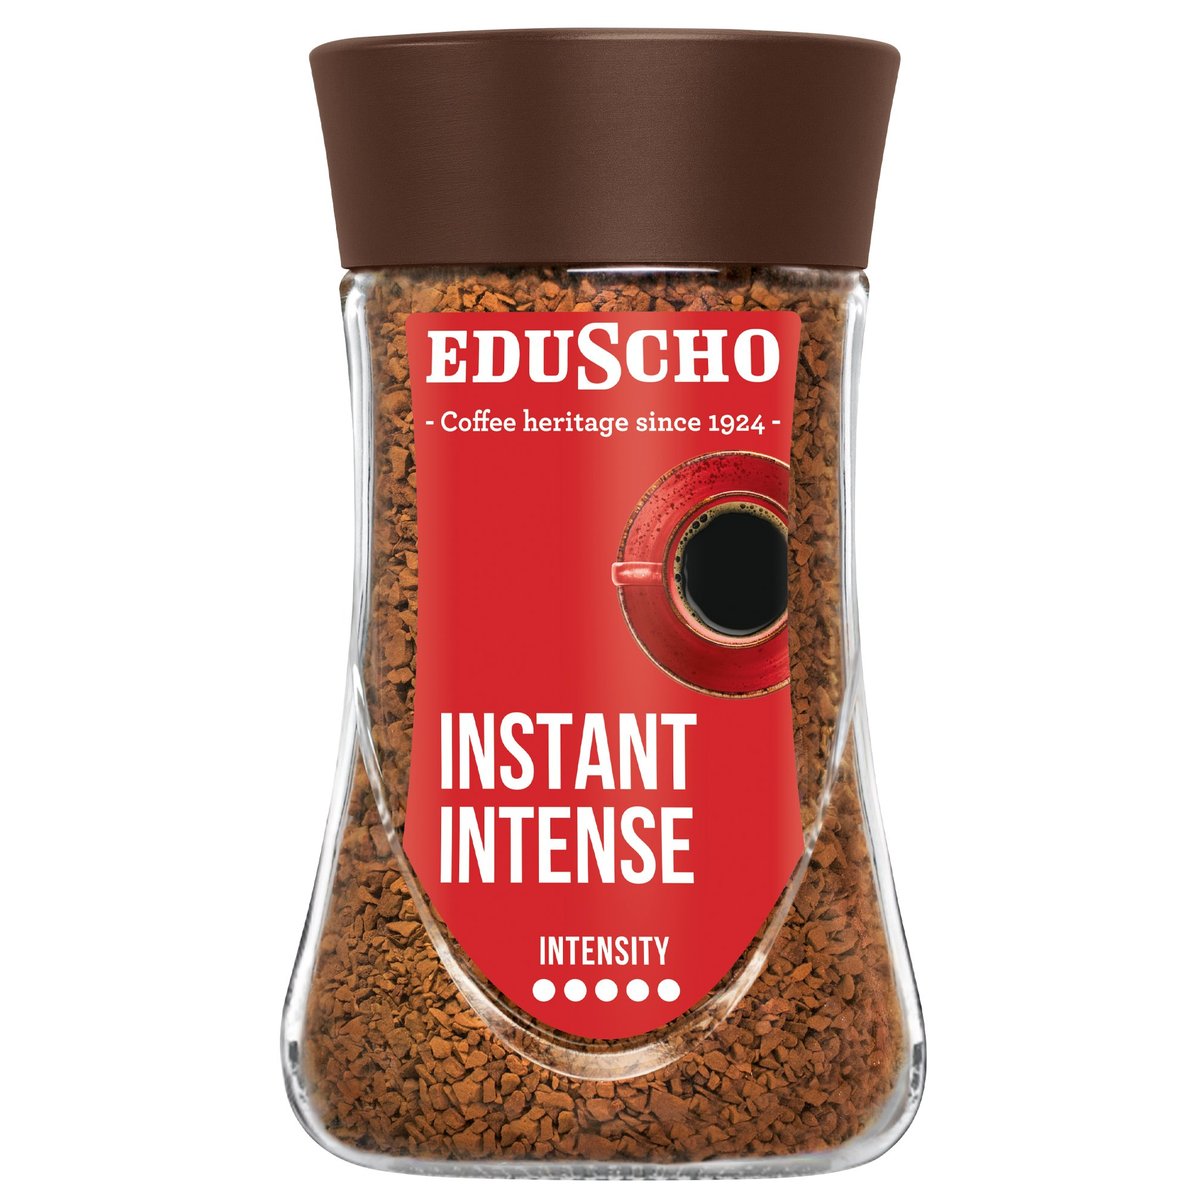 Eduscho Instant Intense